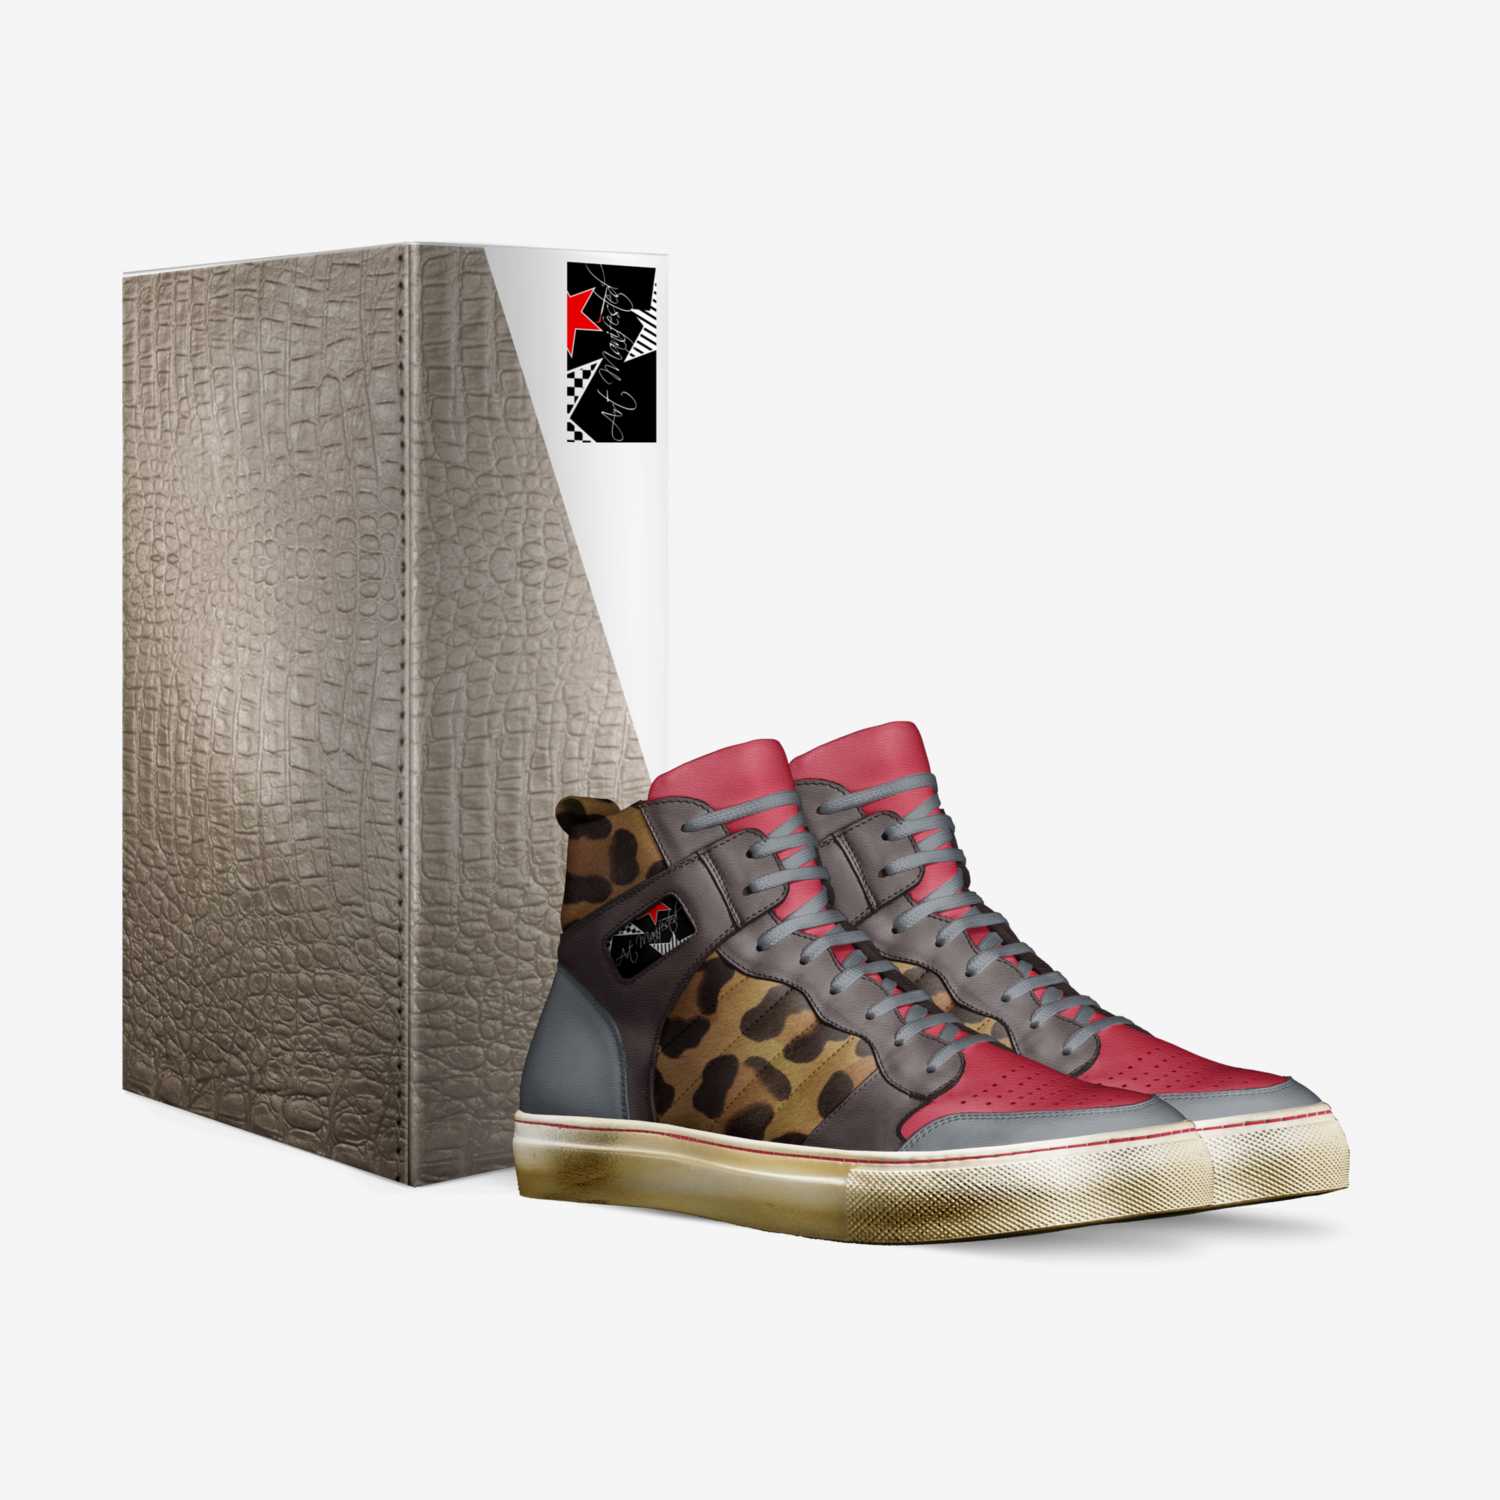 Cheeta Impression  custom made in Italy shoes by E. Mccalla | Box view